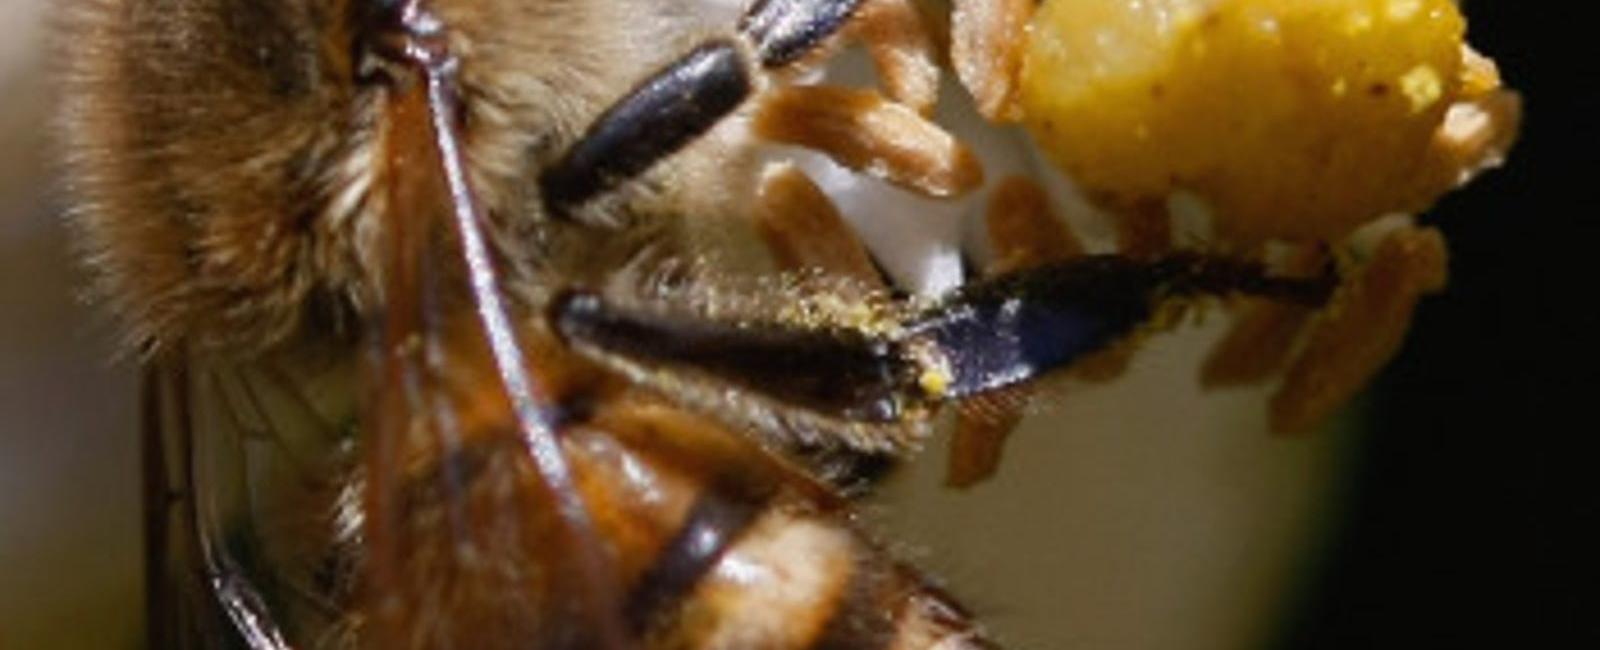 Honeybees can distinguish human faces